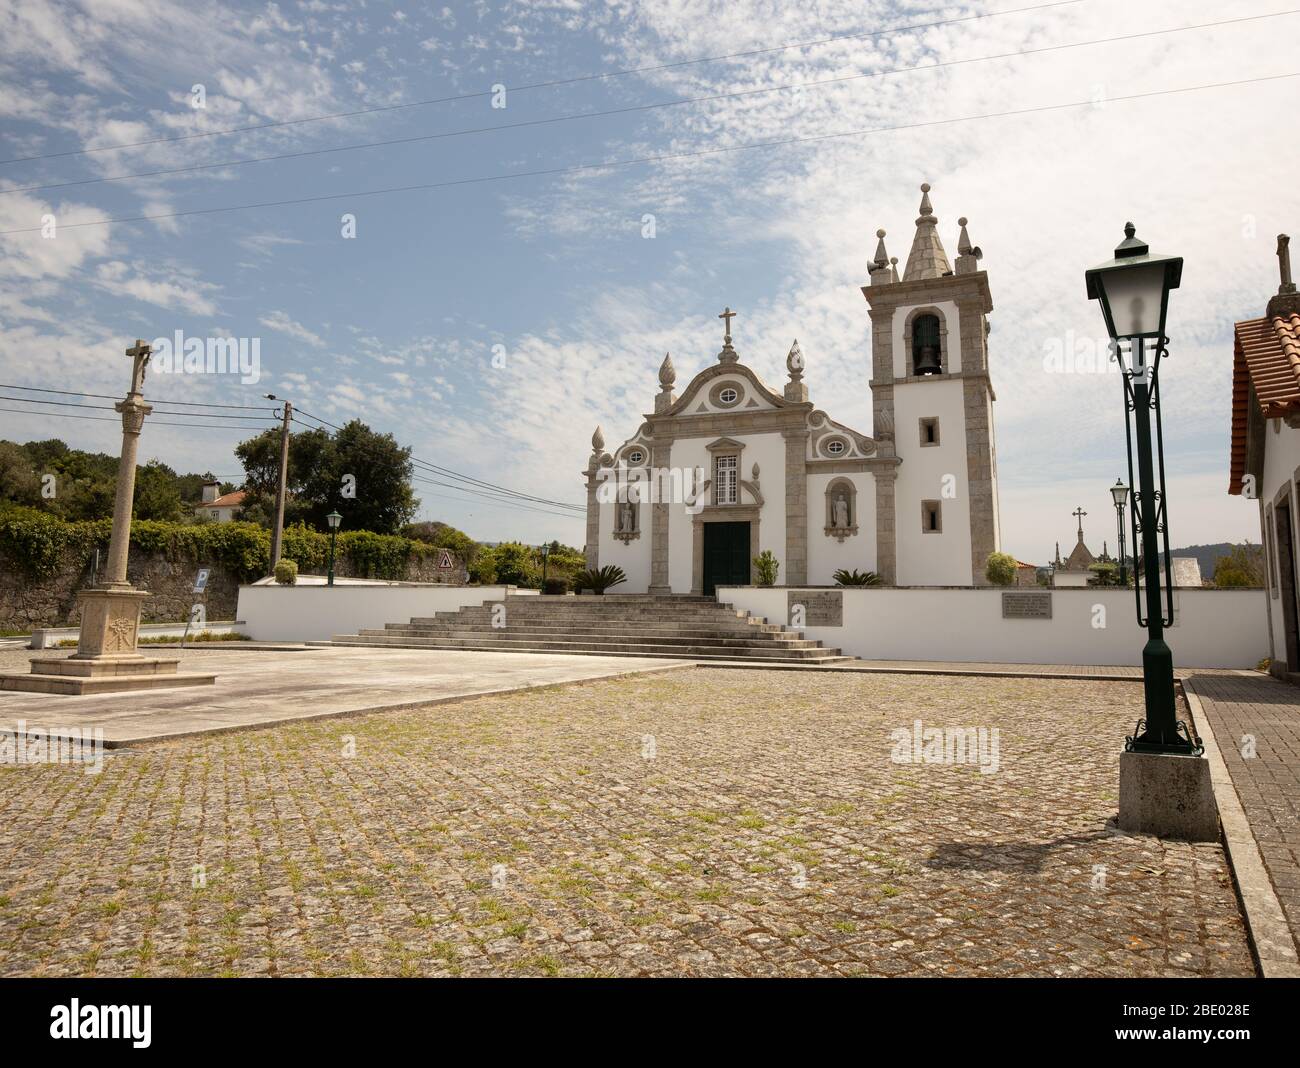 Chiesa cattolica di Freixieiro de Soutelo, in pietra bianca, vicino a Viana do Castelo, Portogallo. Foto Stock